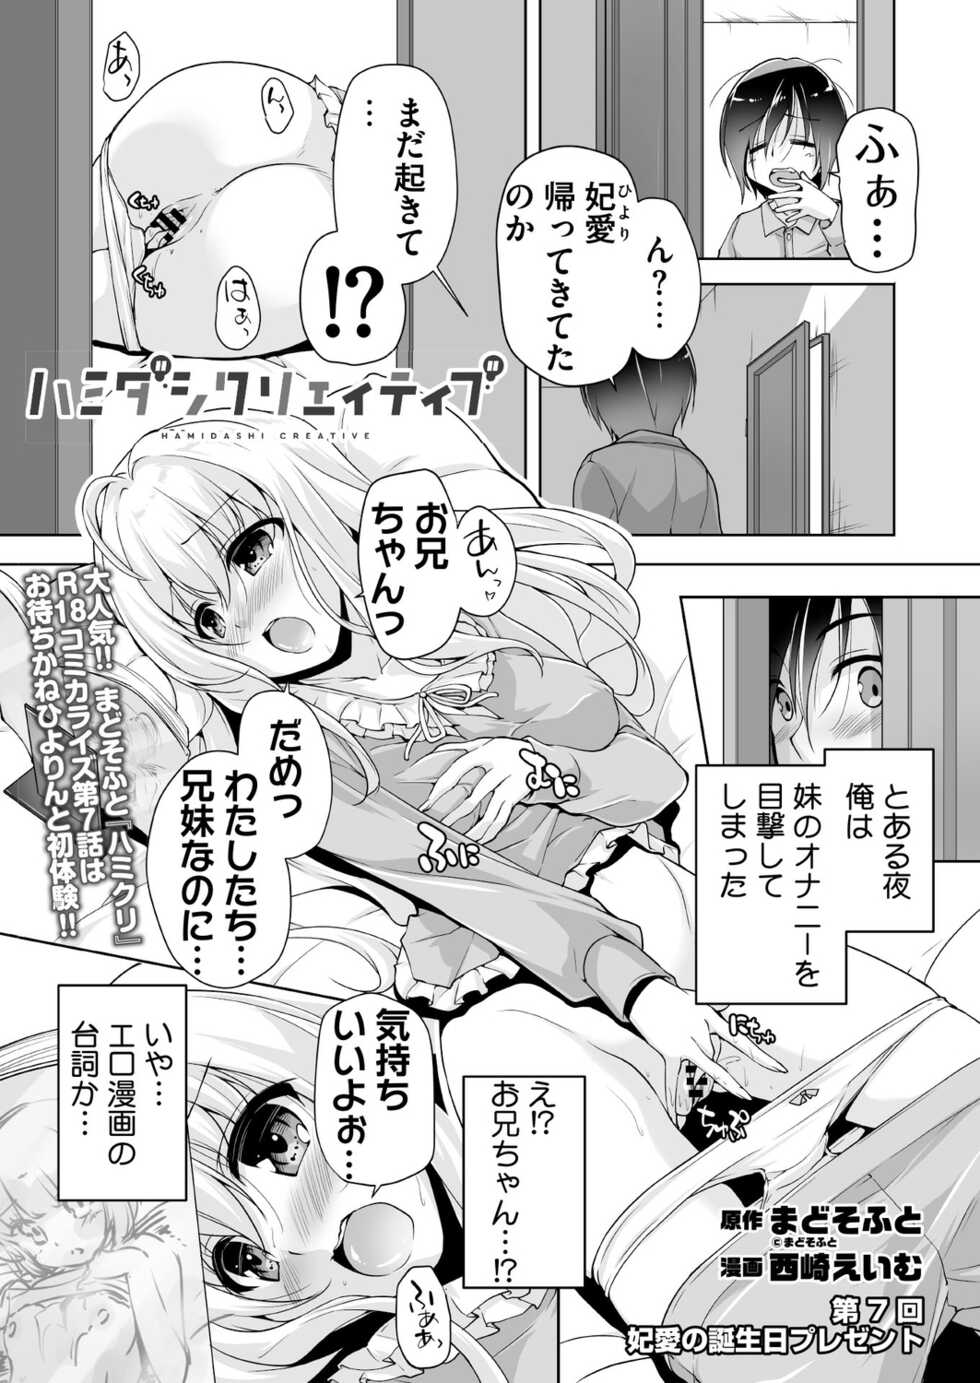 [Nishizaki Eimu]Hiyorin no tanjobi present (BugBug 2022-01) [Hamidashi Creative] [Digital] - Page 1